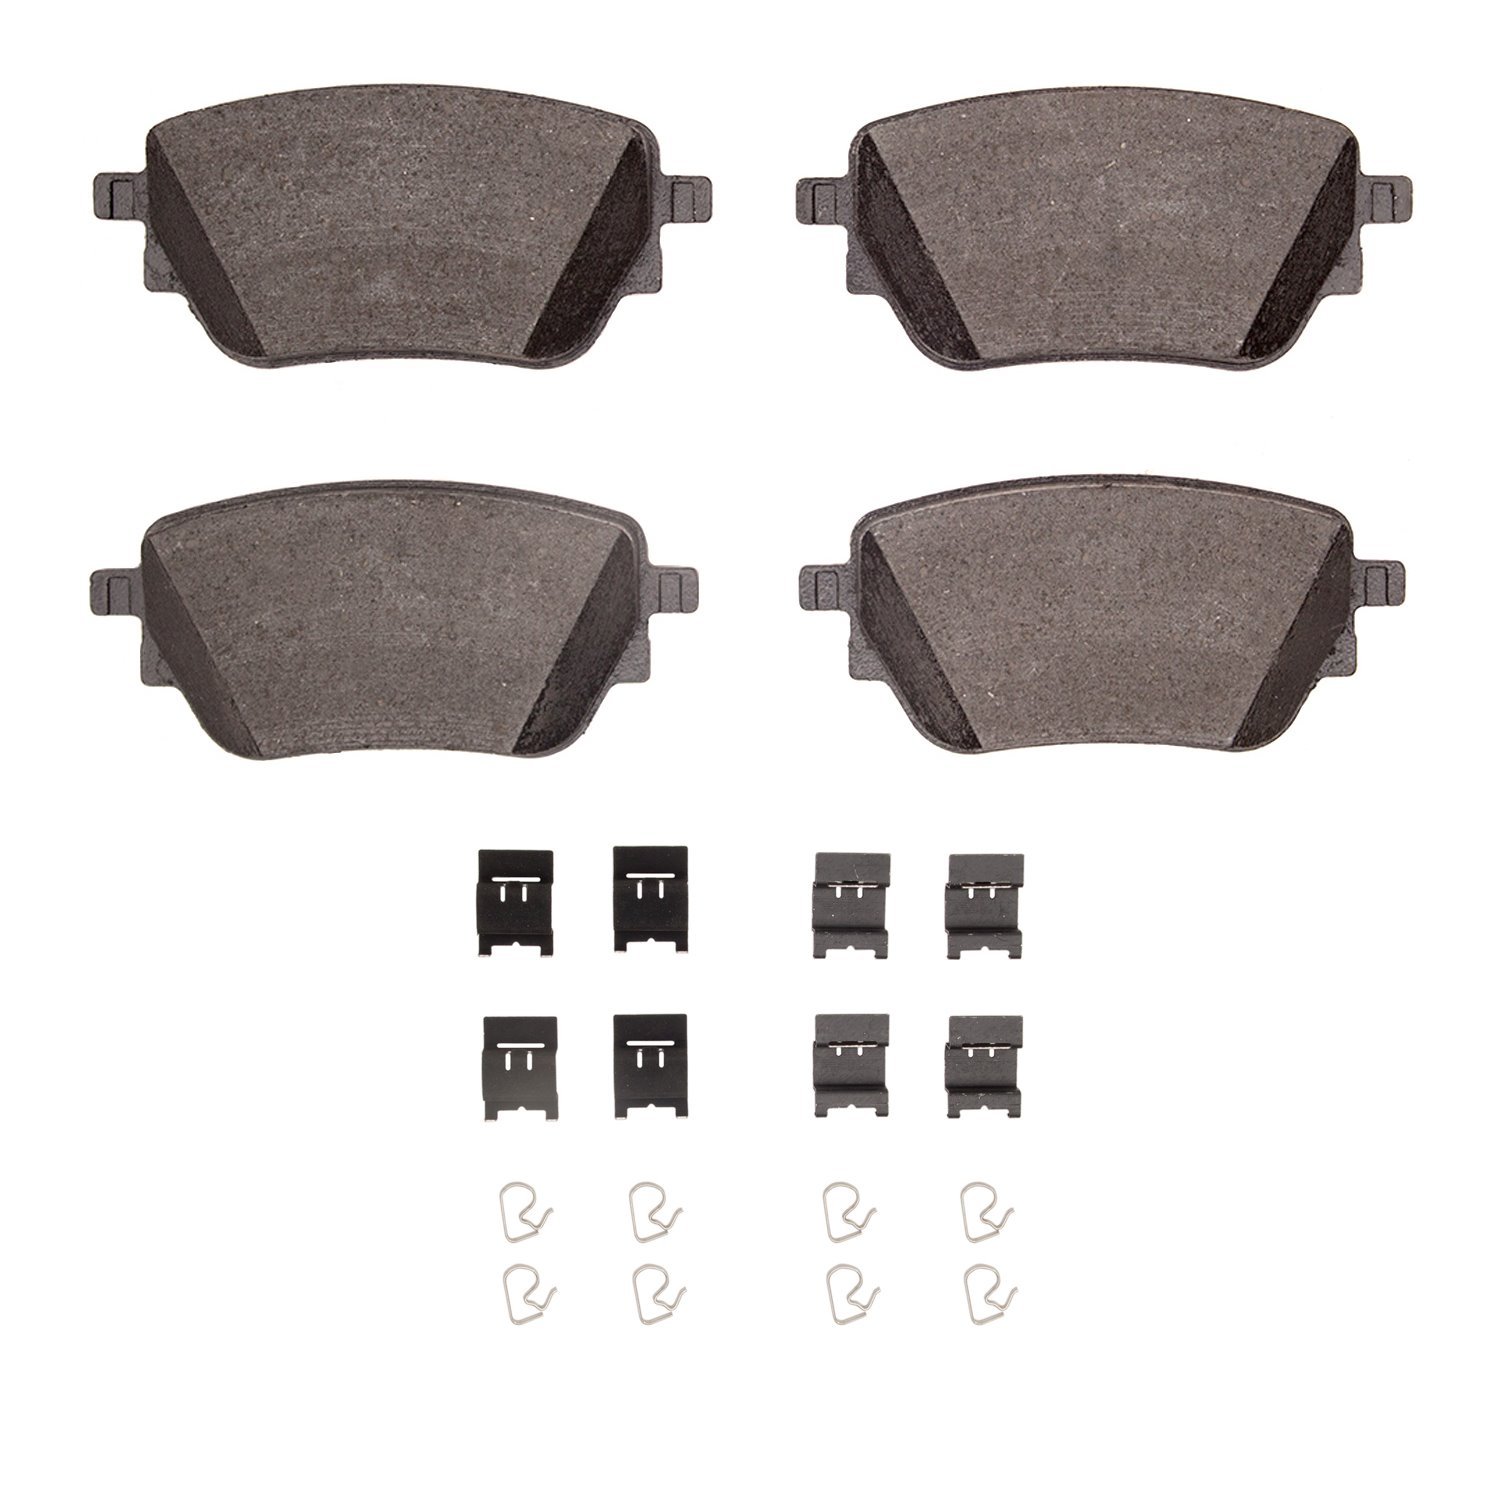 1551-2207-01 5000 Advanced Ceramic Brake Pads & Hardware Kit, Fits Select Mercedes-Benz, Position: Rear